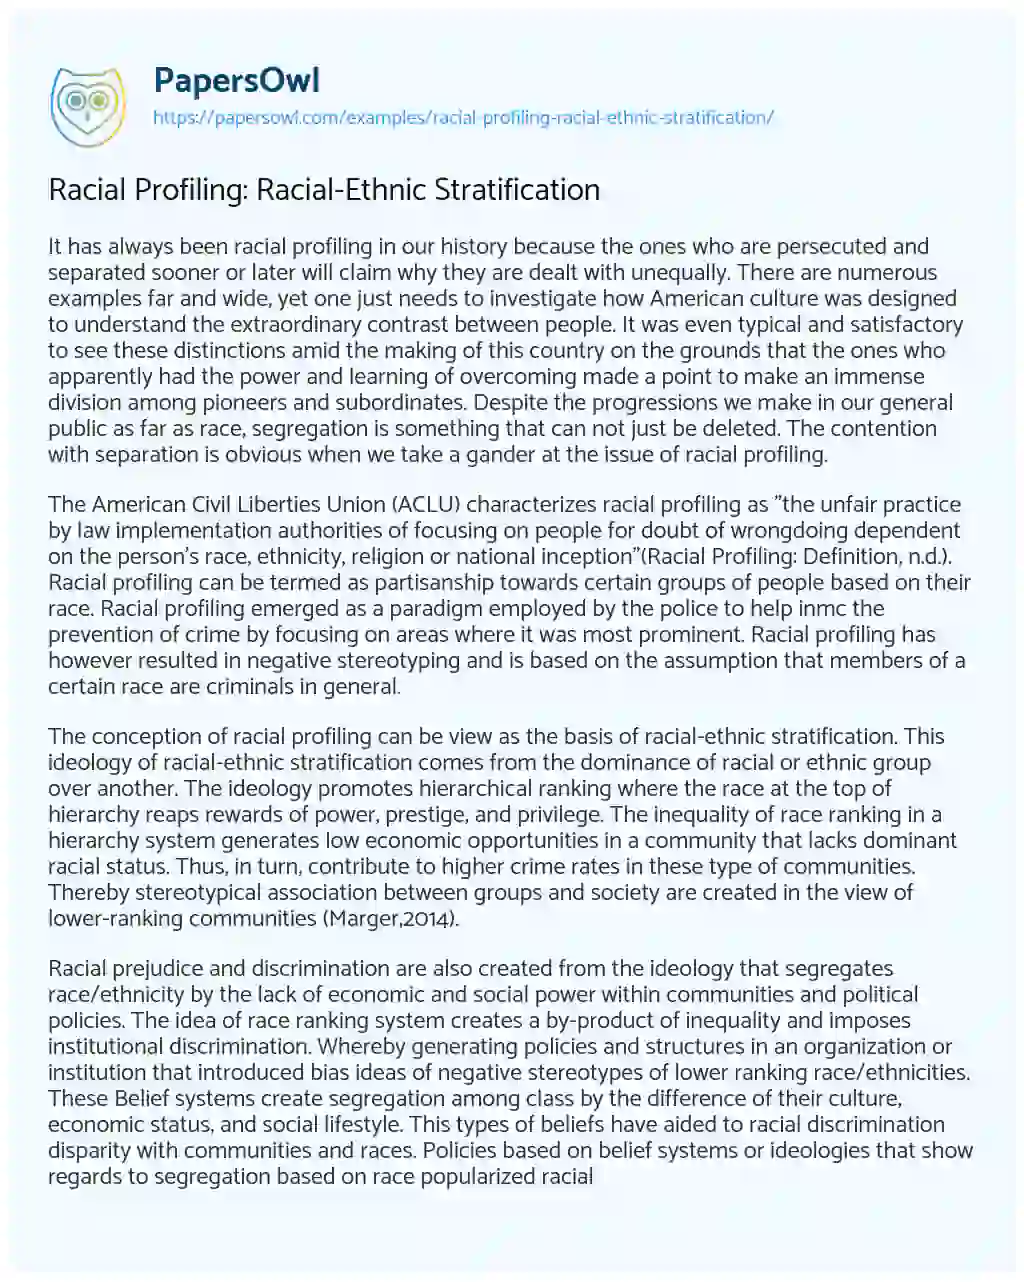 Racial Profiling: Racial-Ethnic Stratification essay